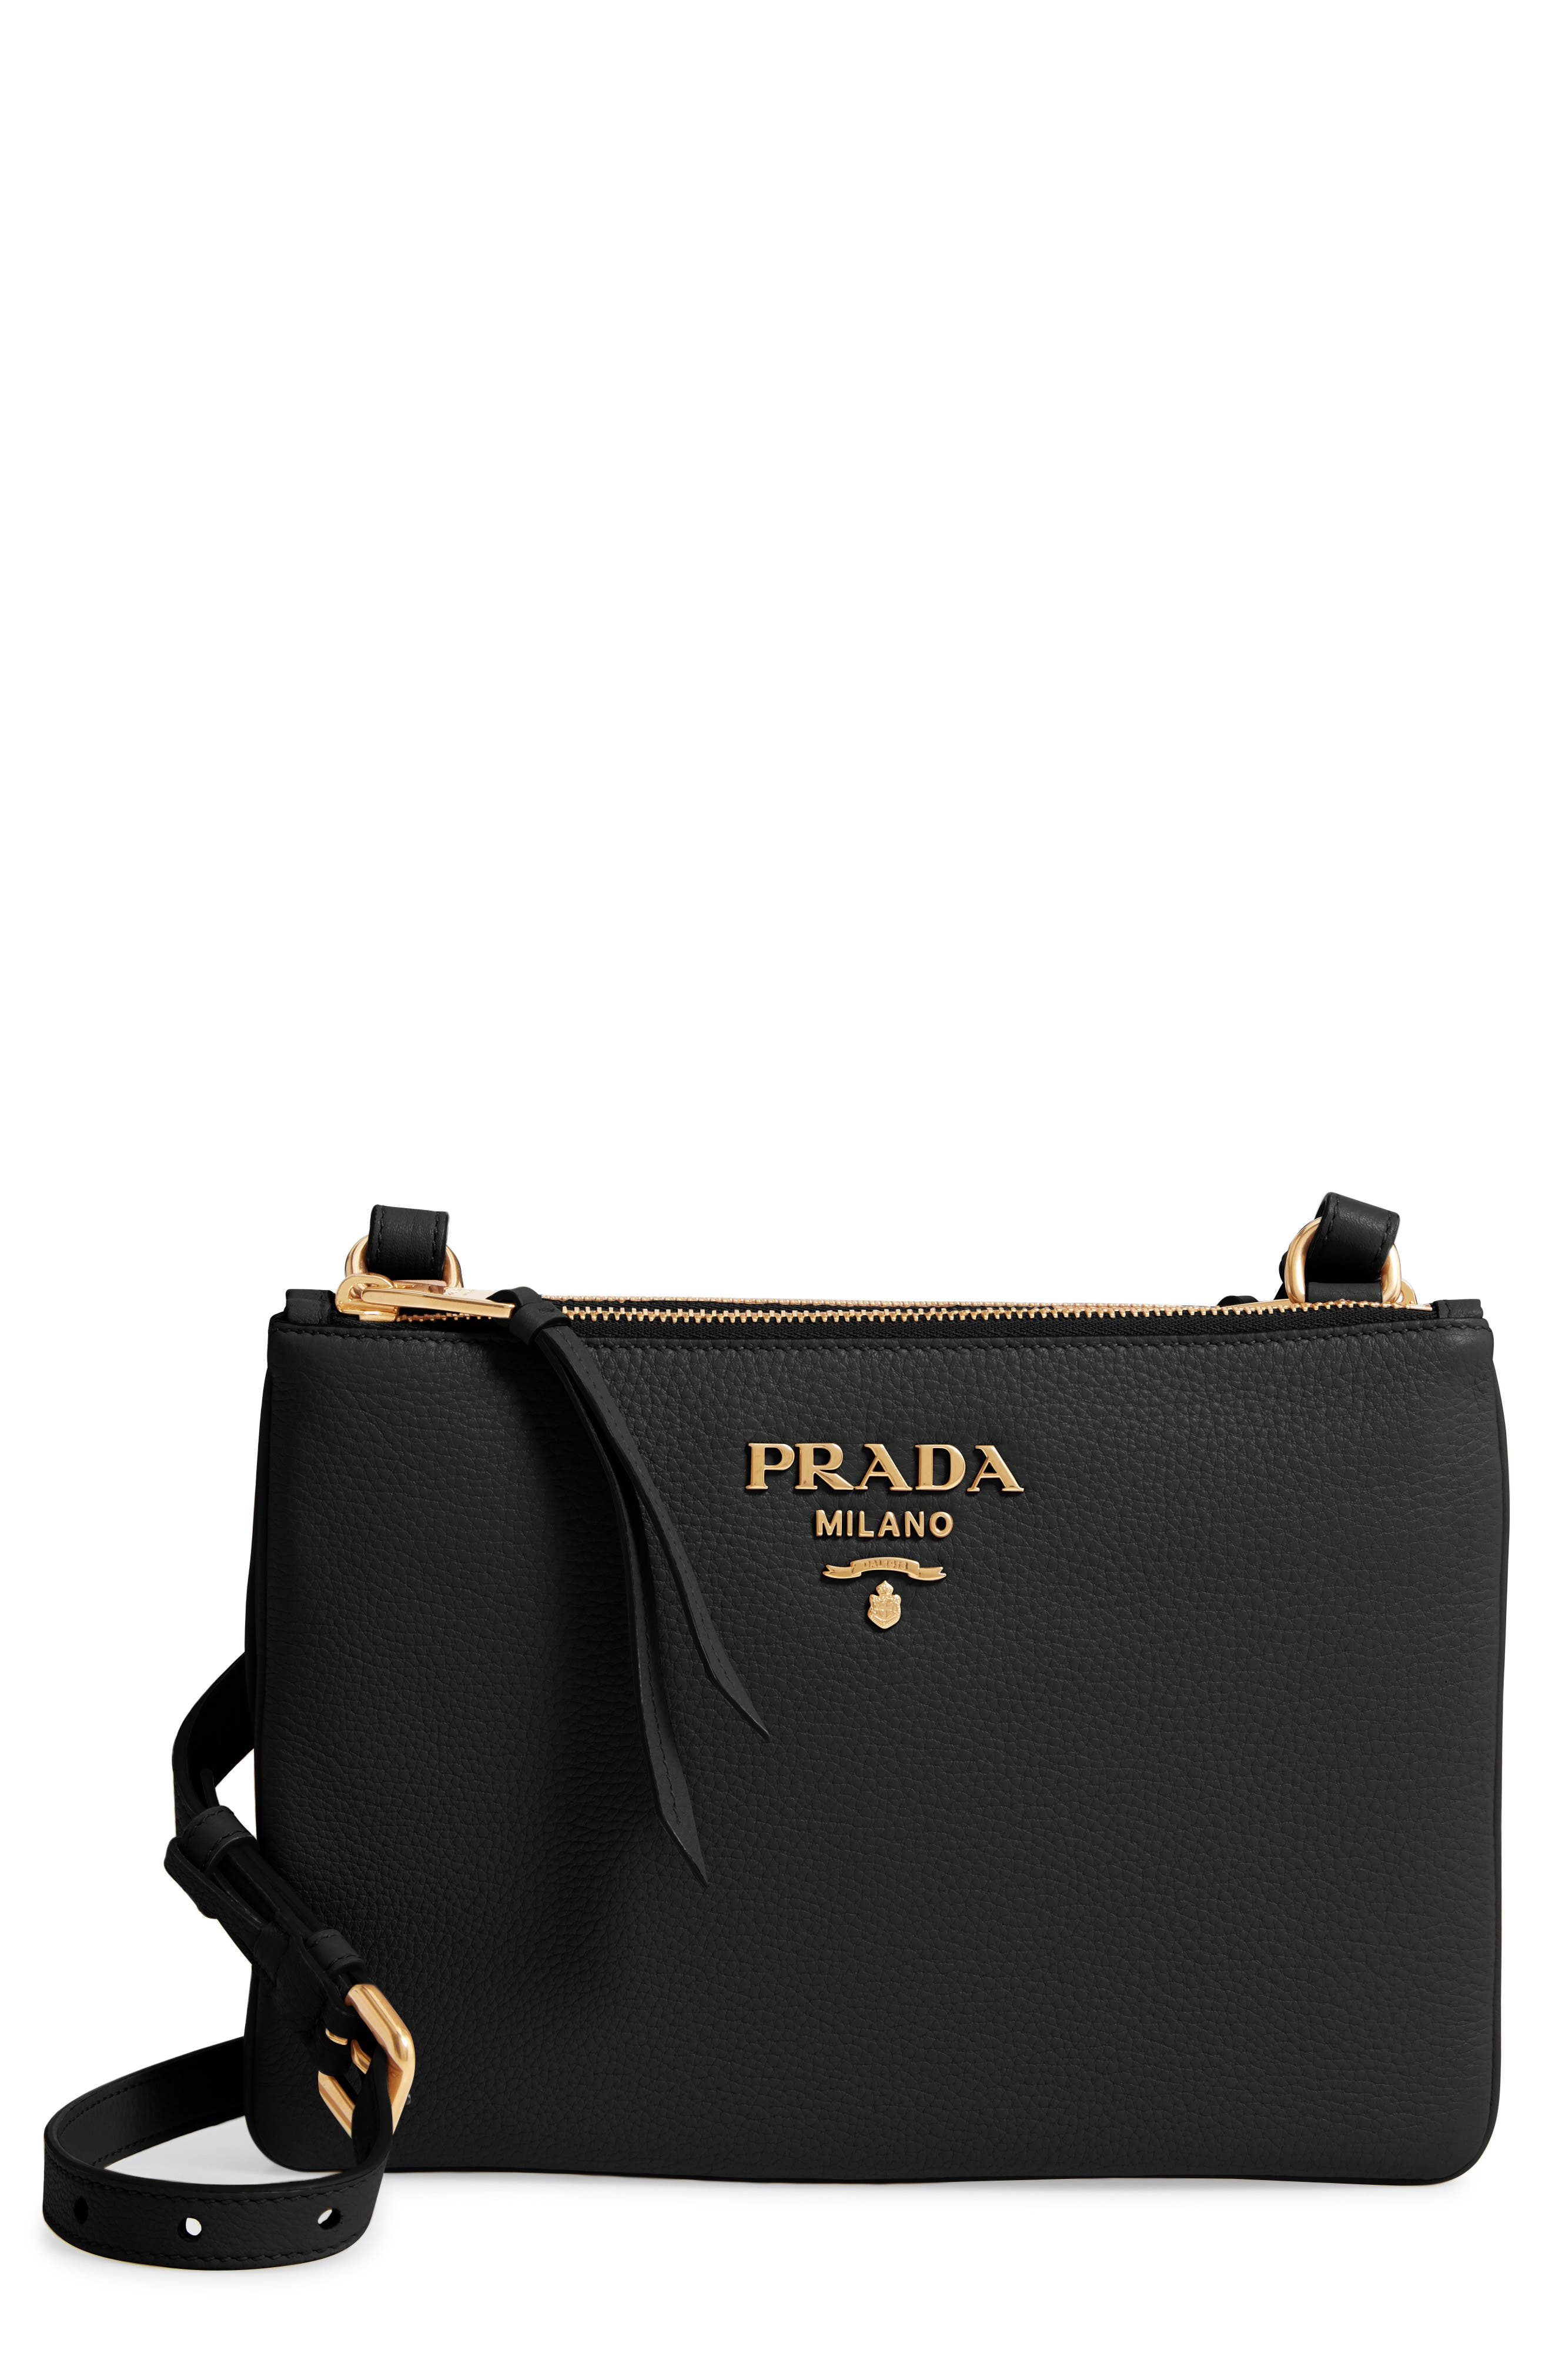 prada leather crossbody bag